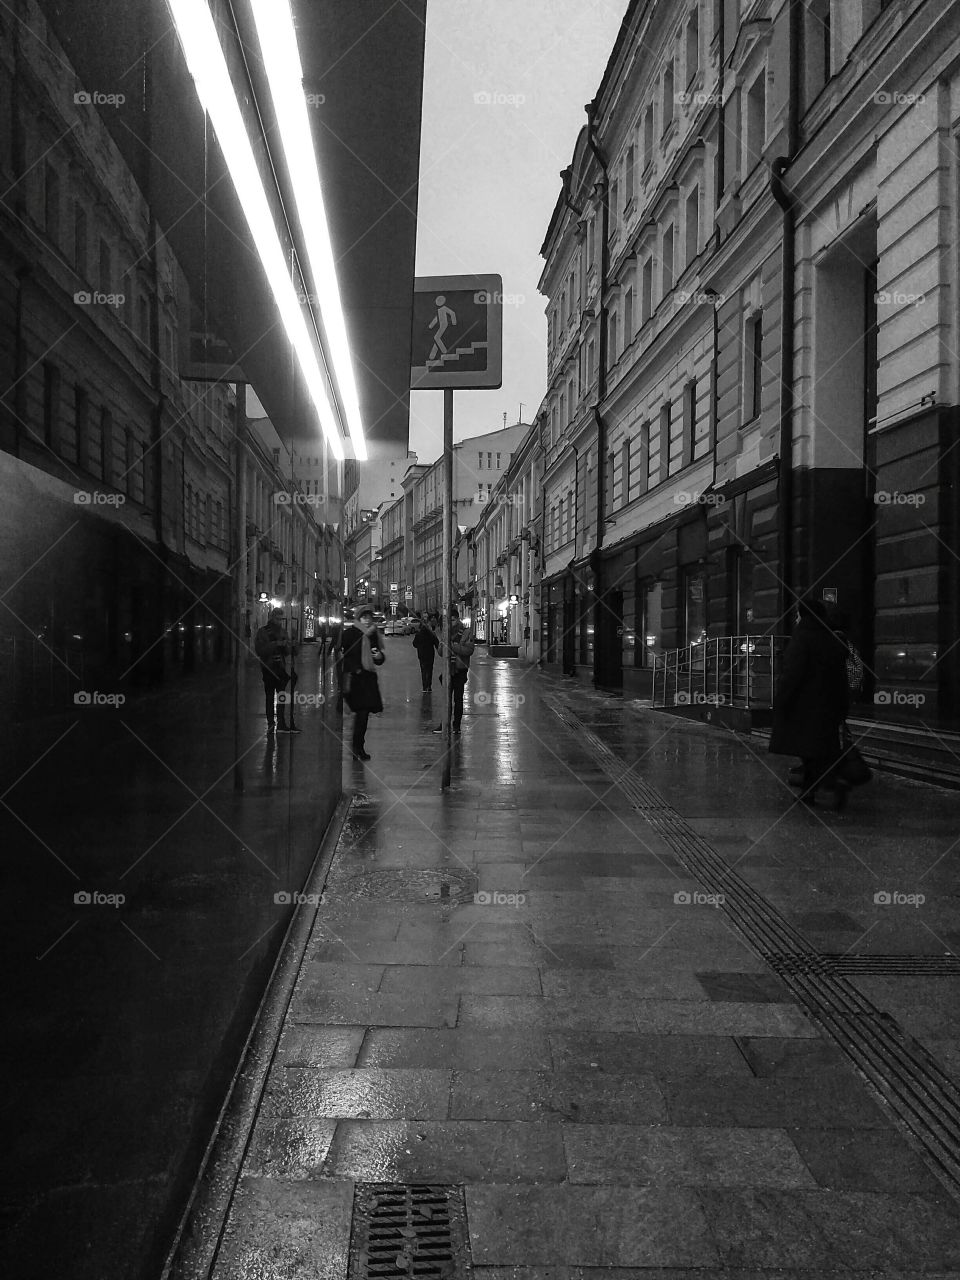 rainy evening in the city